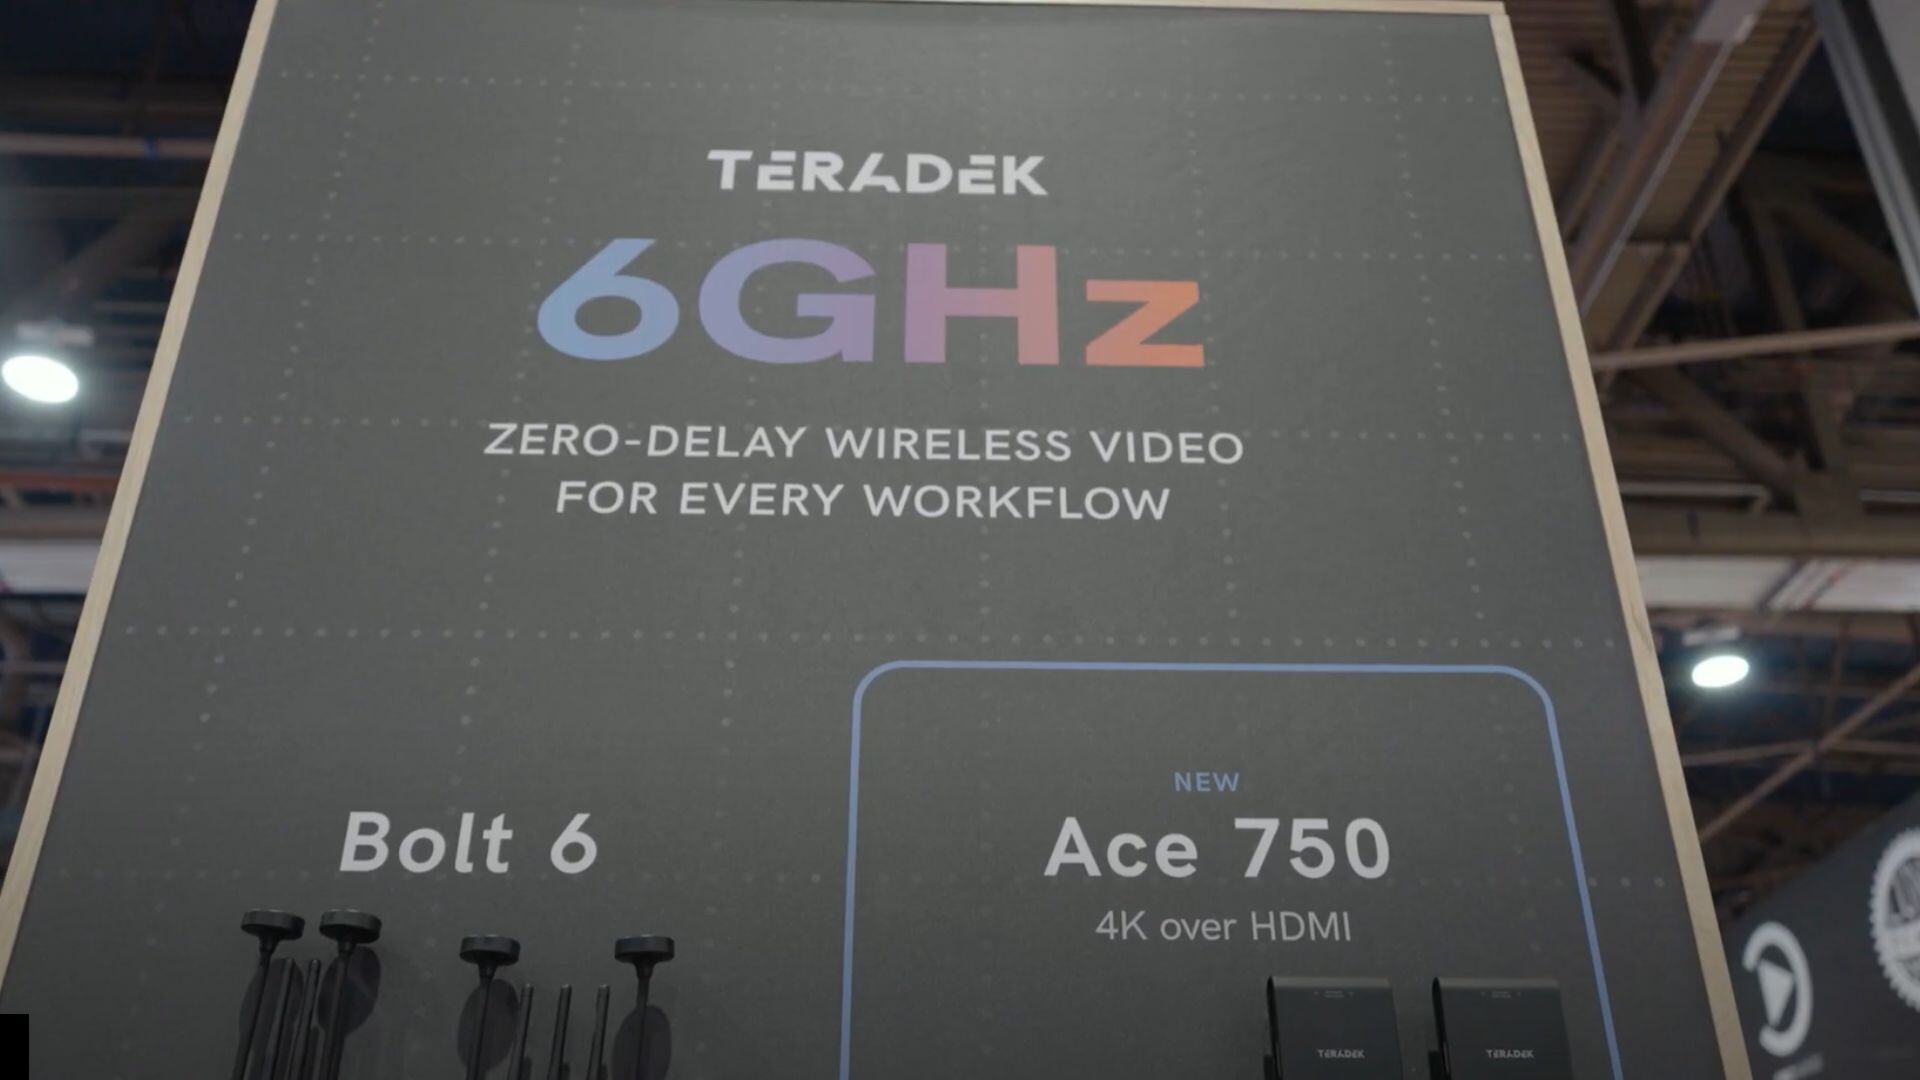 Teradek has developed multiple zero delay systems